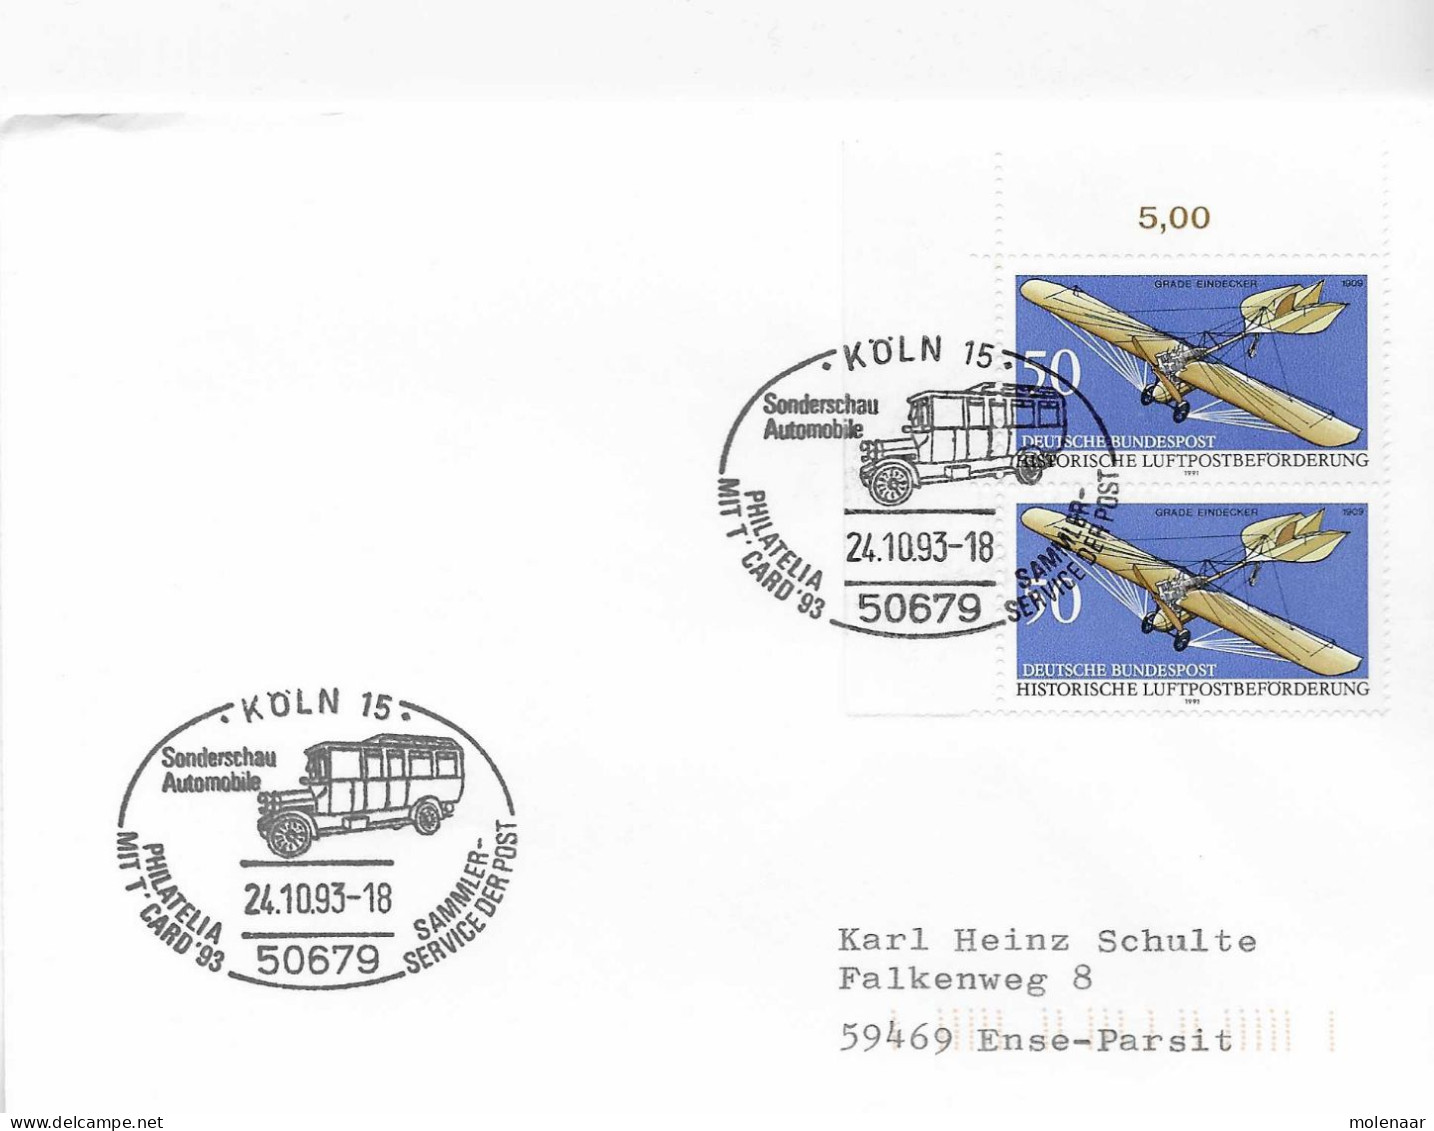 Postzegels > Europa > Duitsland > West-Duitsland > 1990-1999 > Brief Met 2x 1523 (17320) - Lettres & Documents